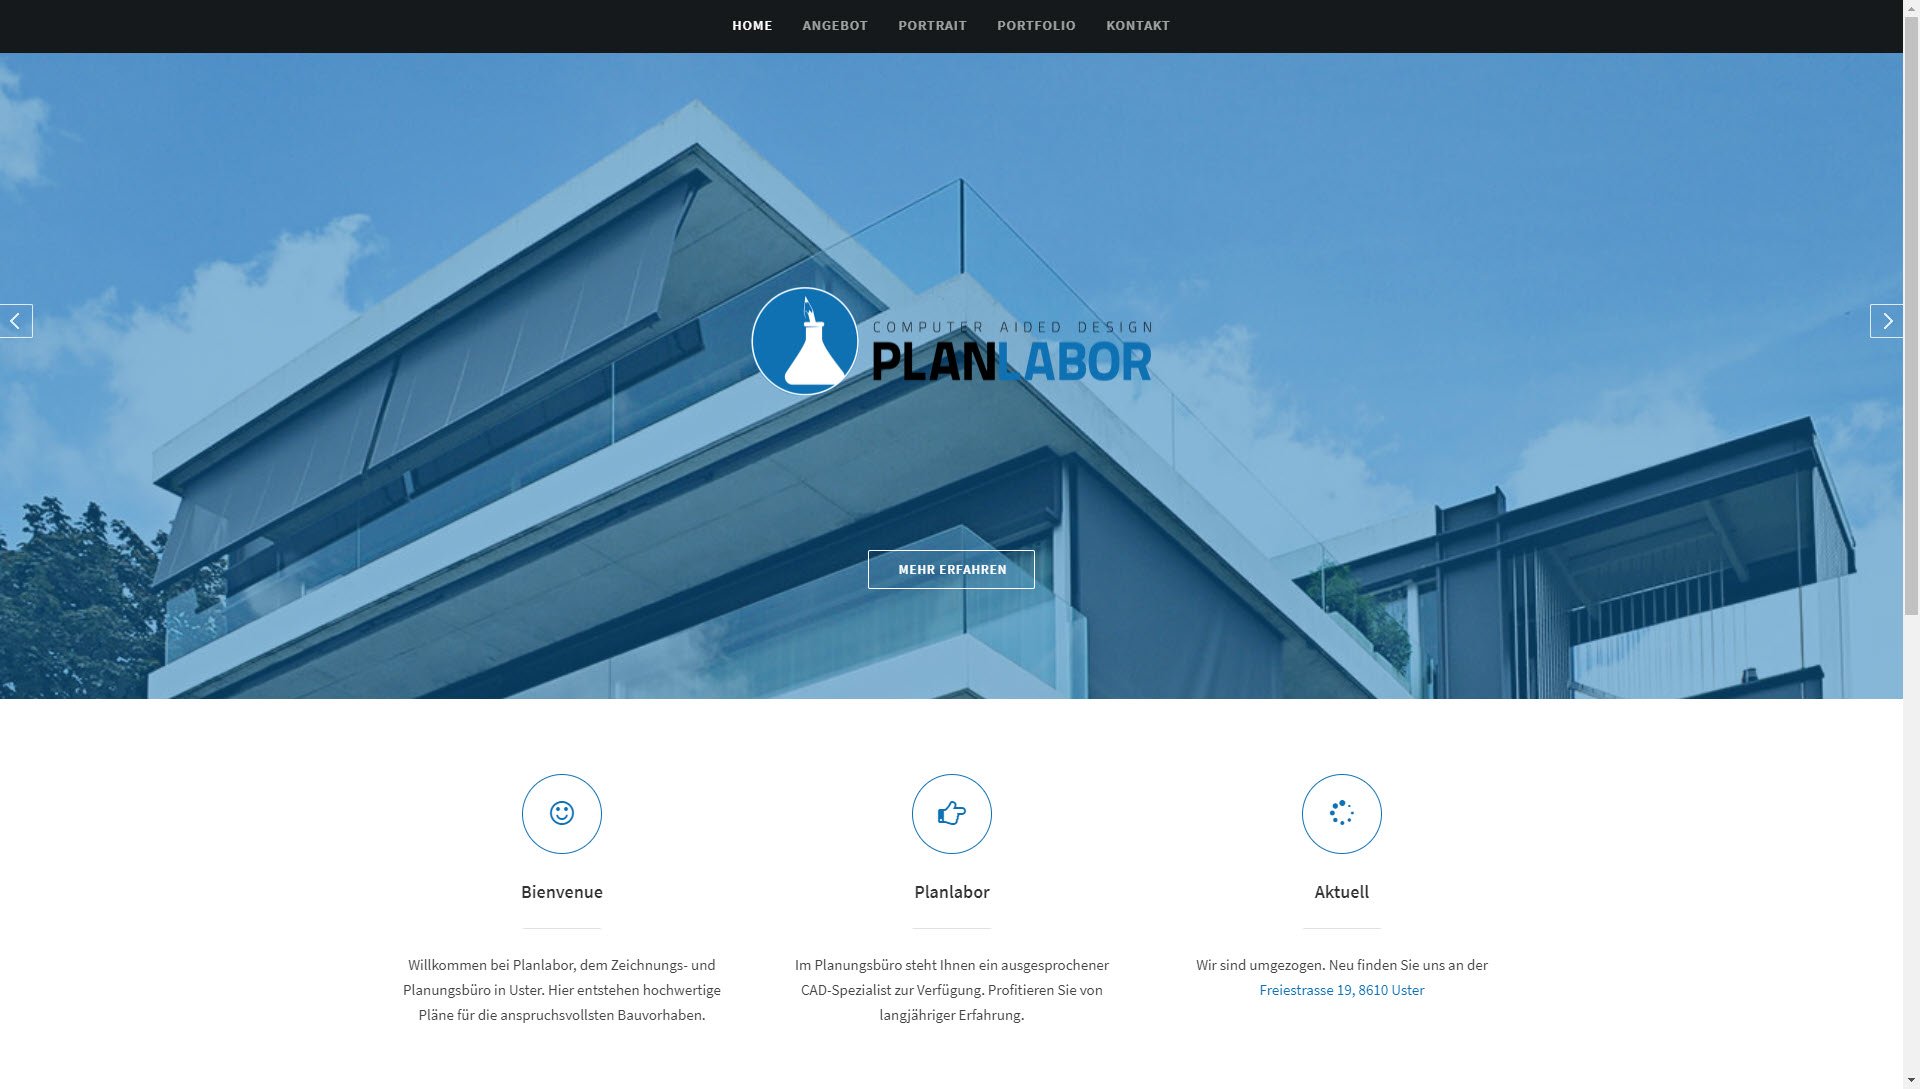 Planlabor GmbH